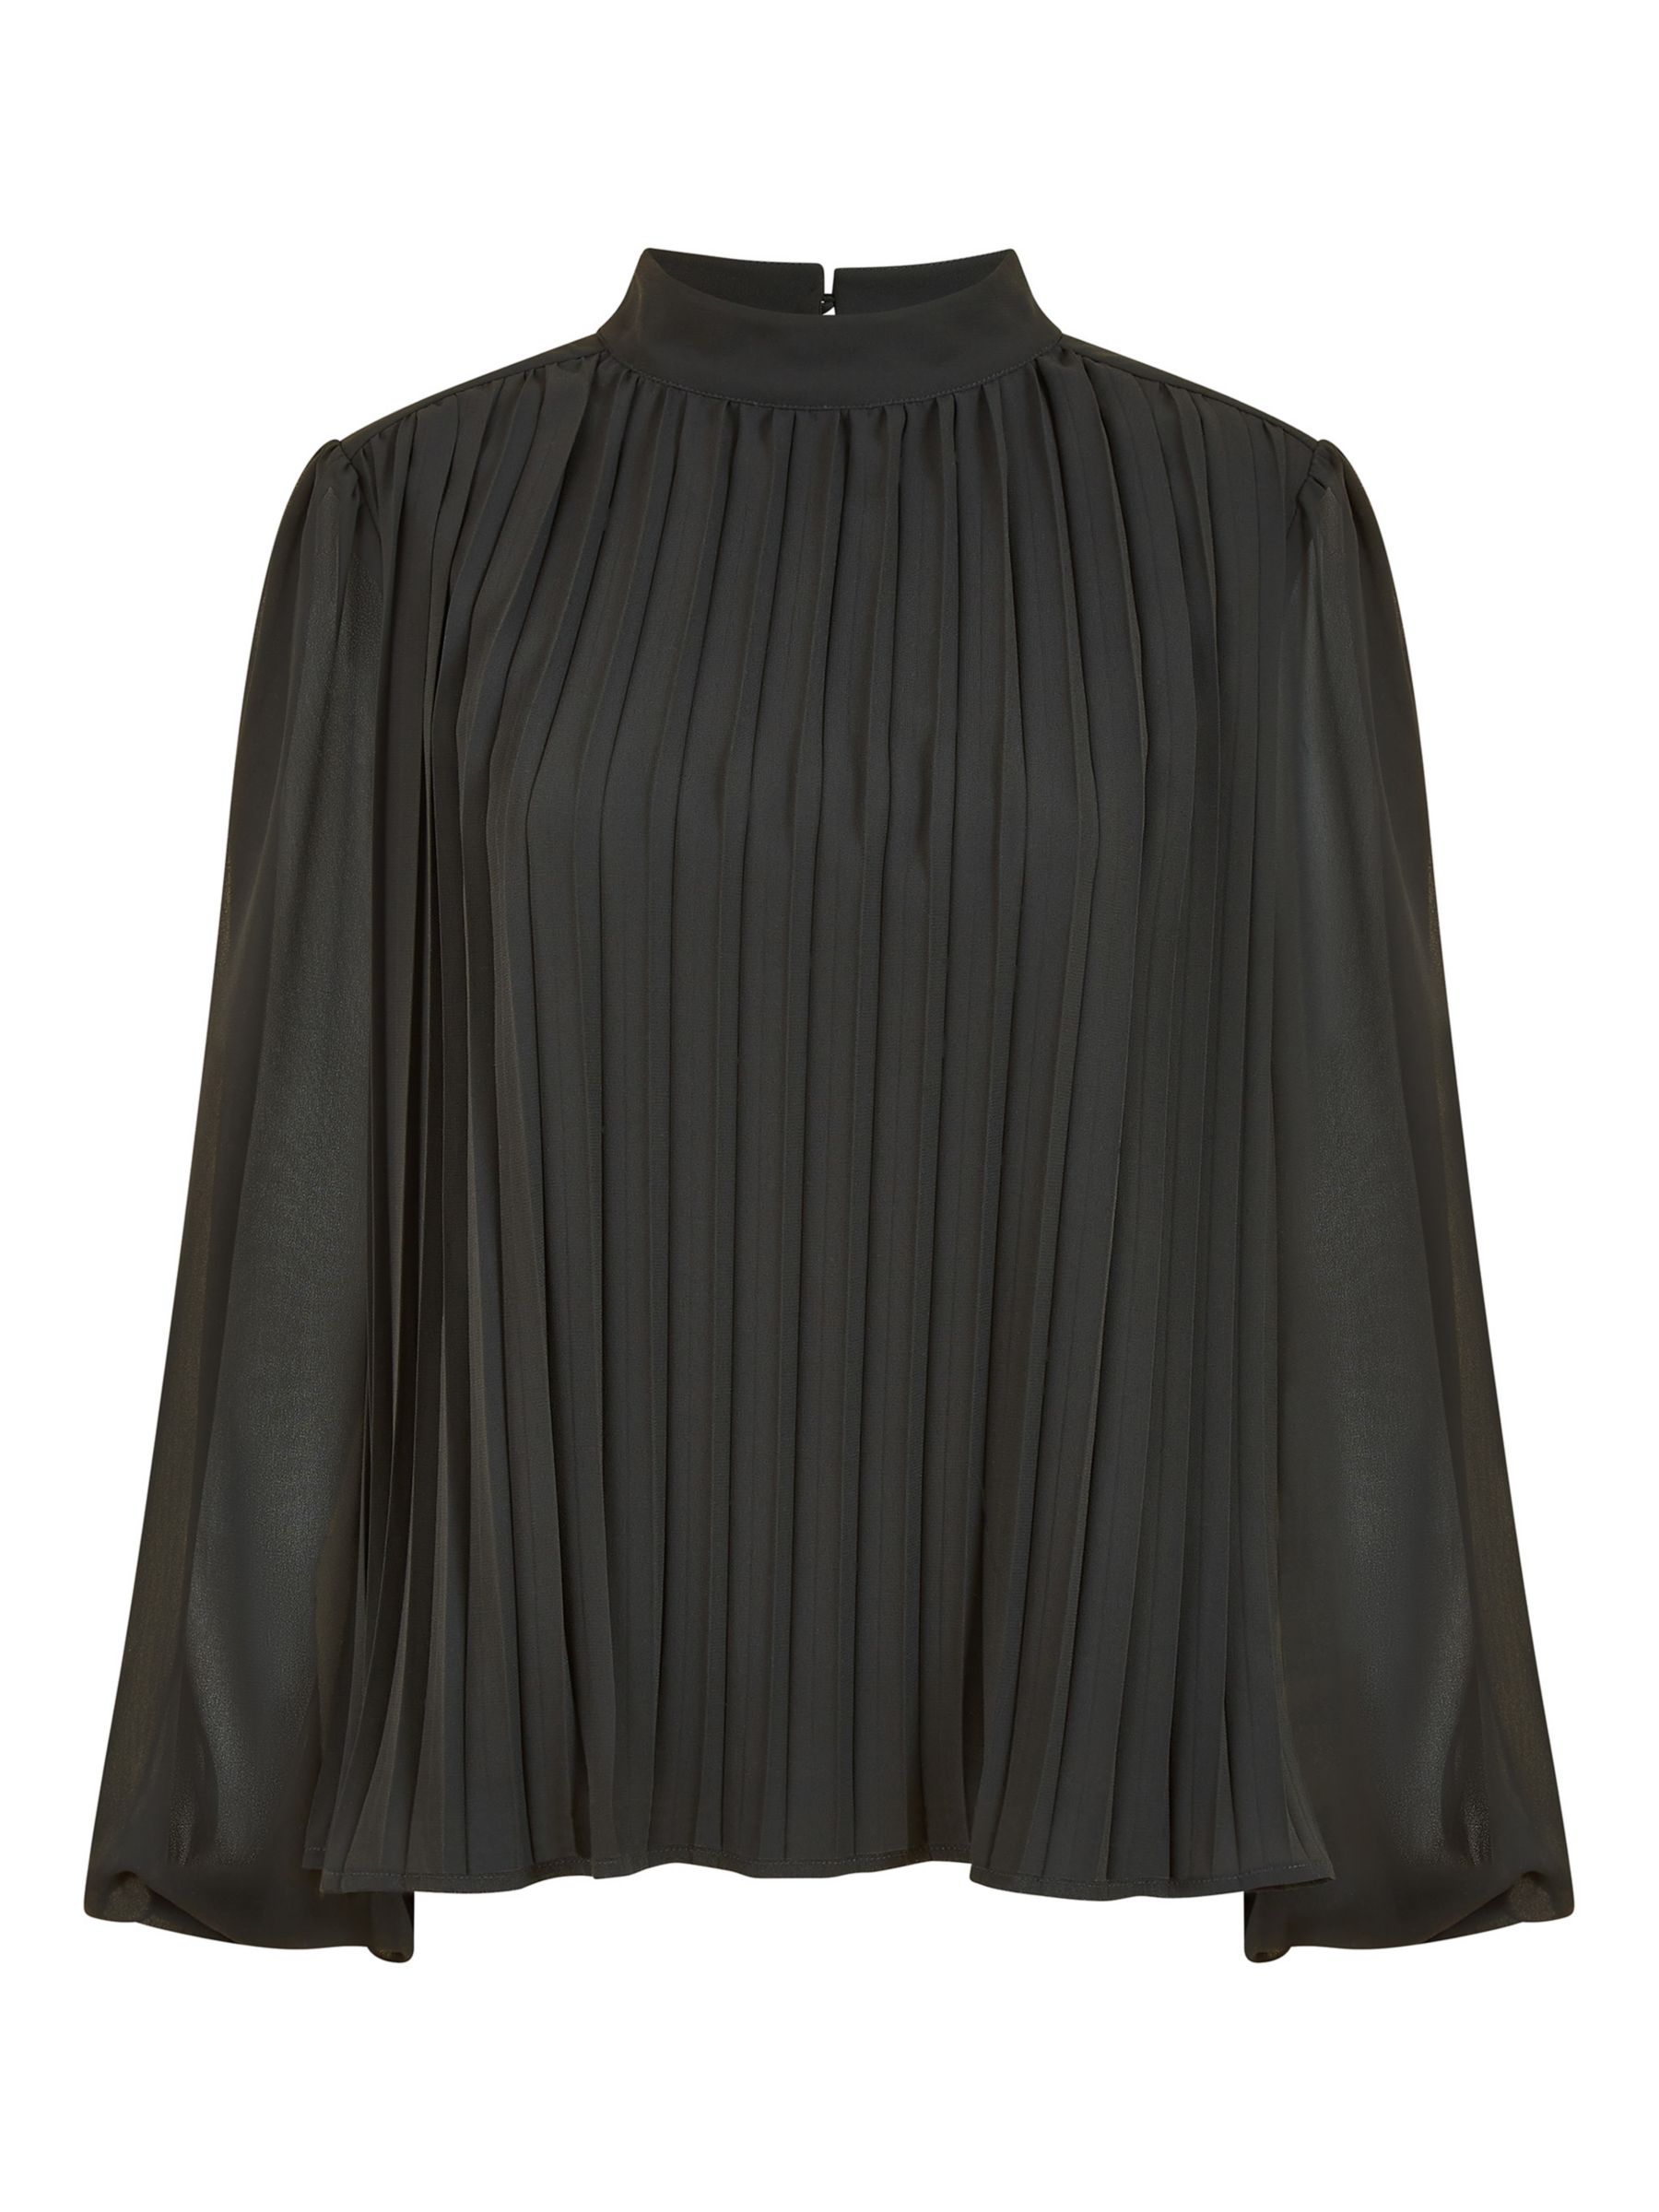 Mela London Pleated Long Sleeve Top, Black at John Lewis & Partners